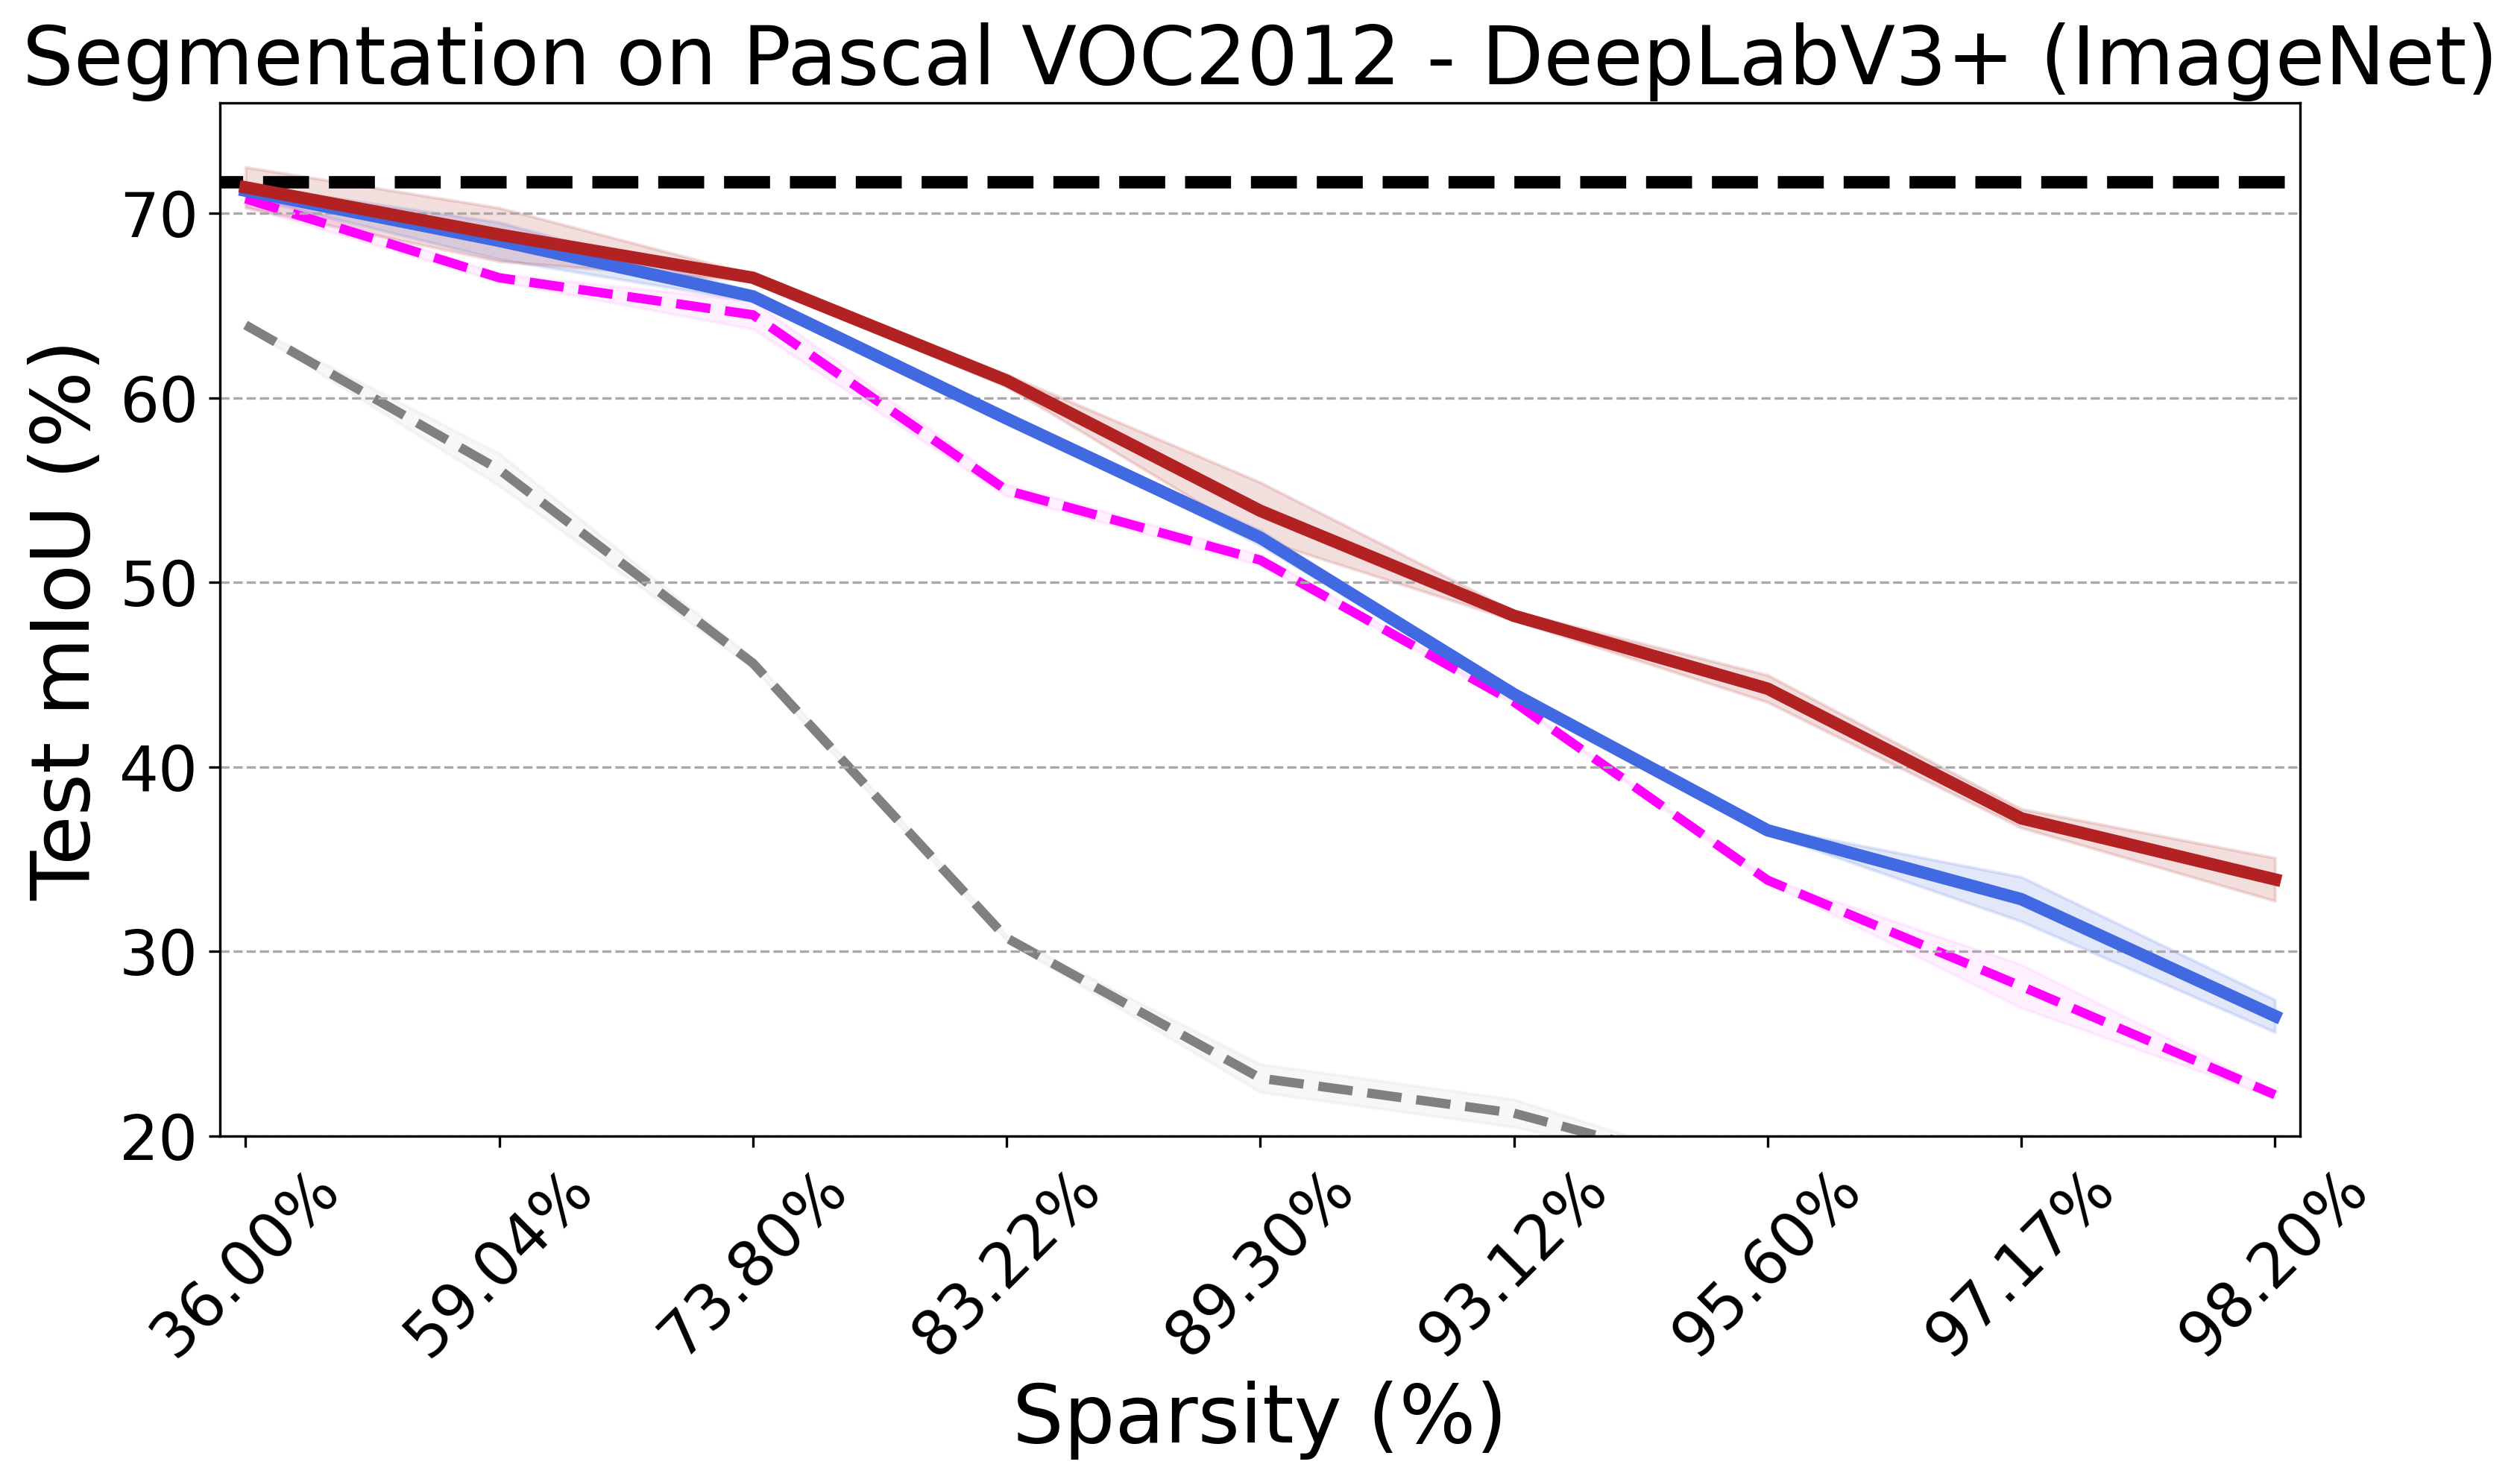 Path eXclusion (PX) on Pascal VOC 2012 - ResNet50 DeepLabV3+ ImageNet pretrain.